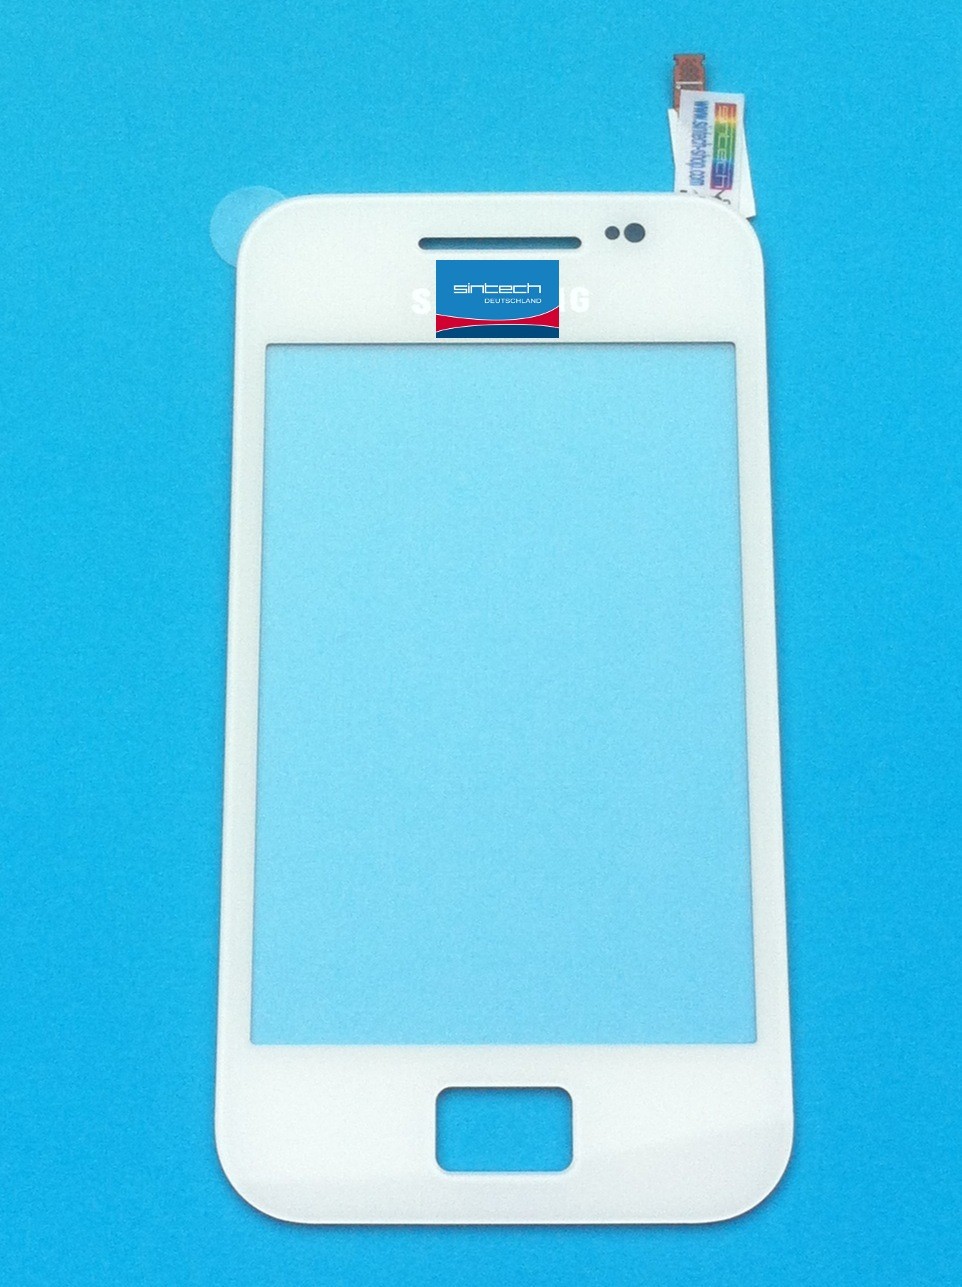 Samsung Galaxy Ace S5830 bílý - Touchscreen